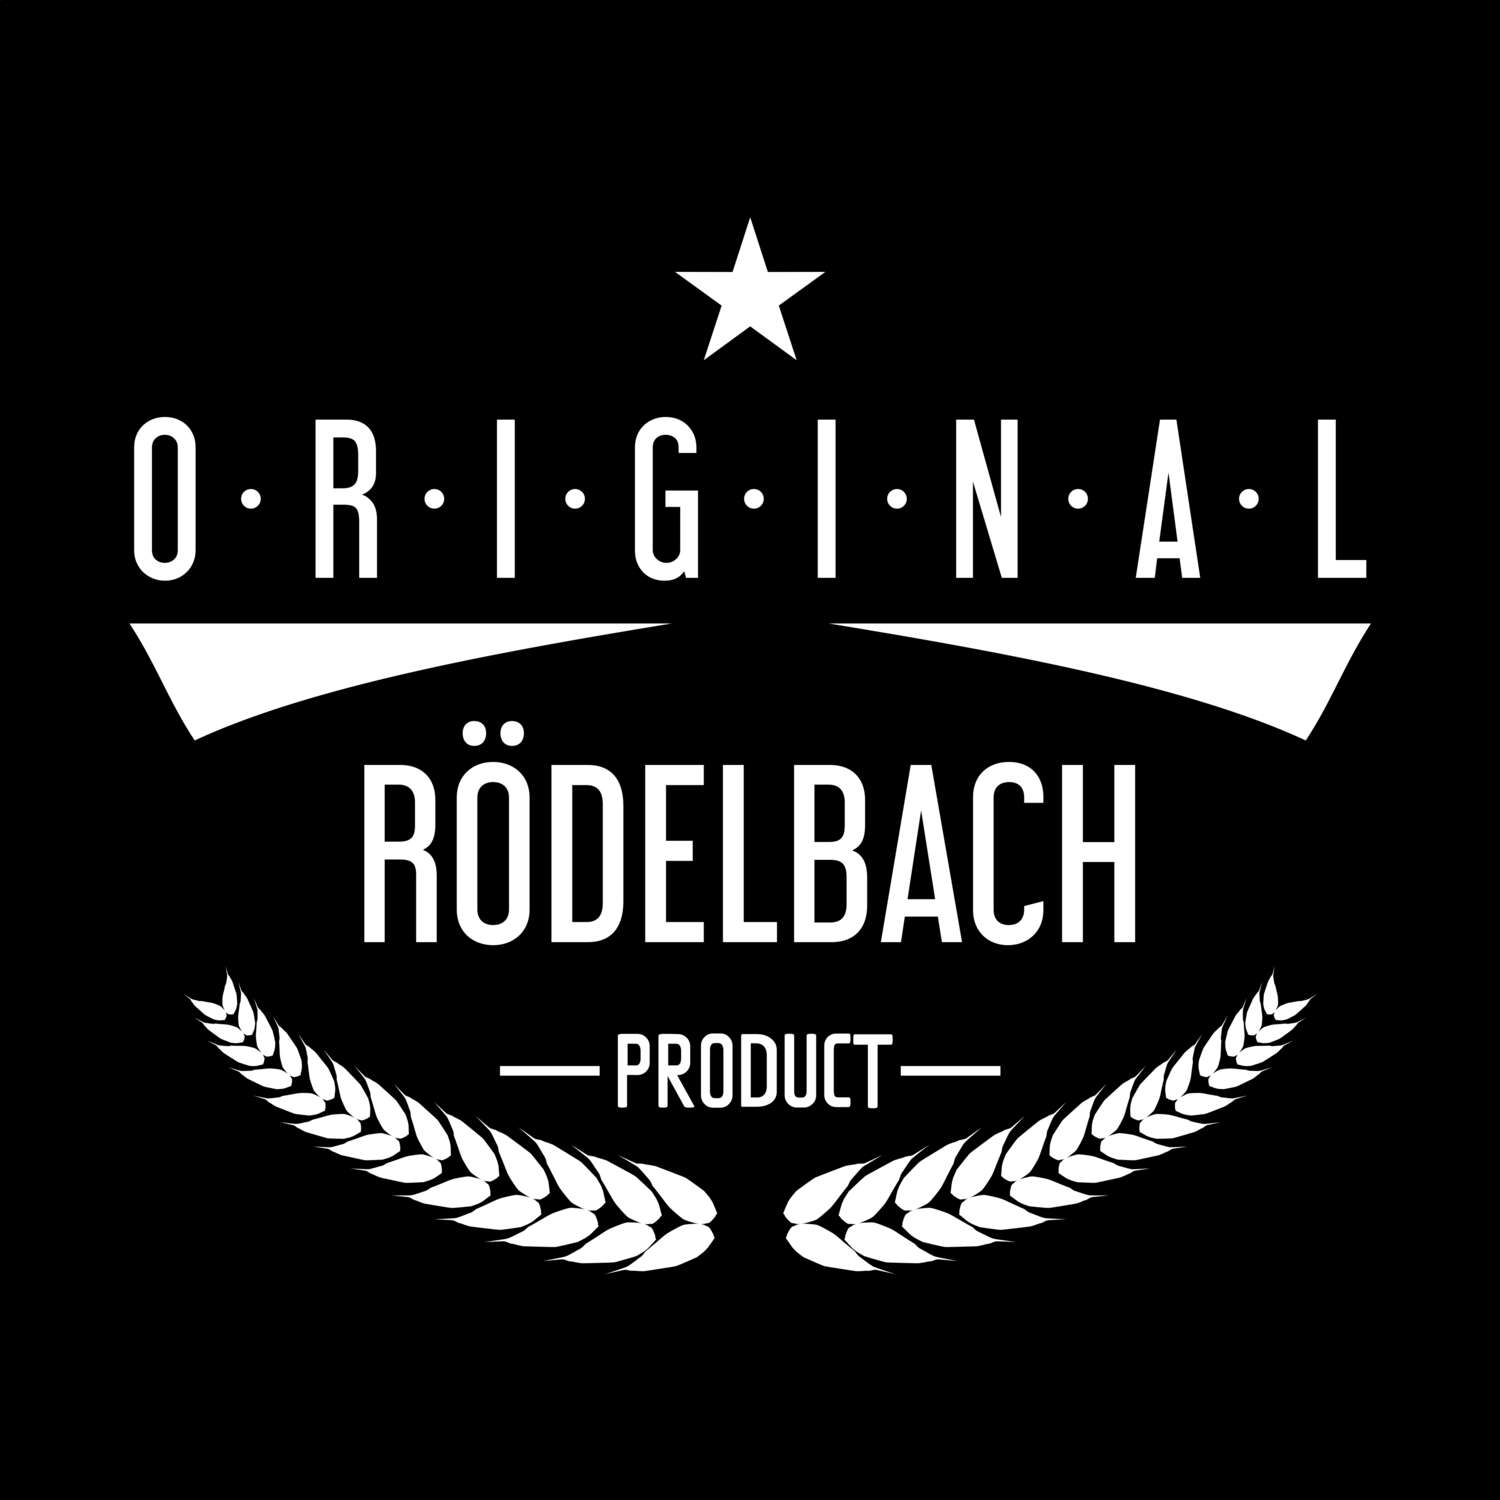 Rödelbach T-Shirt »Original Product«